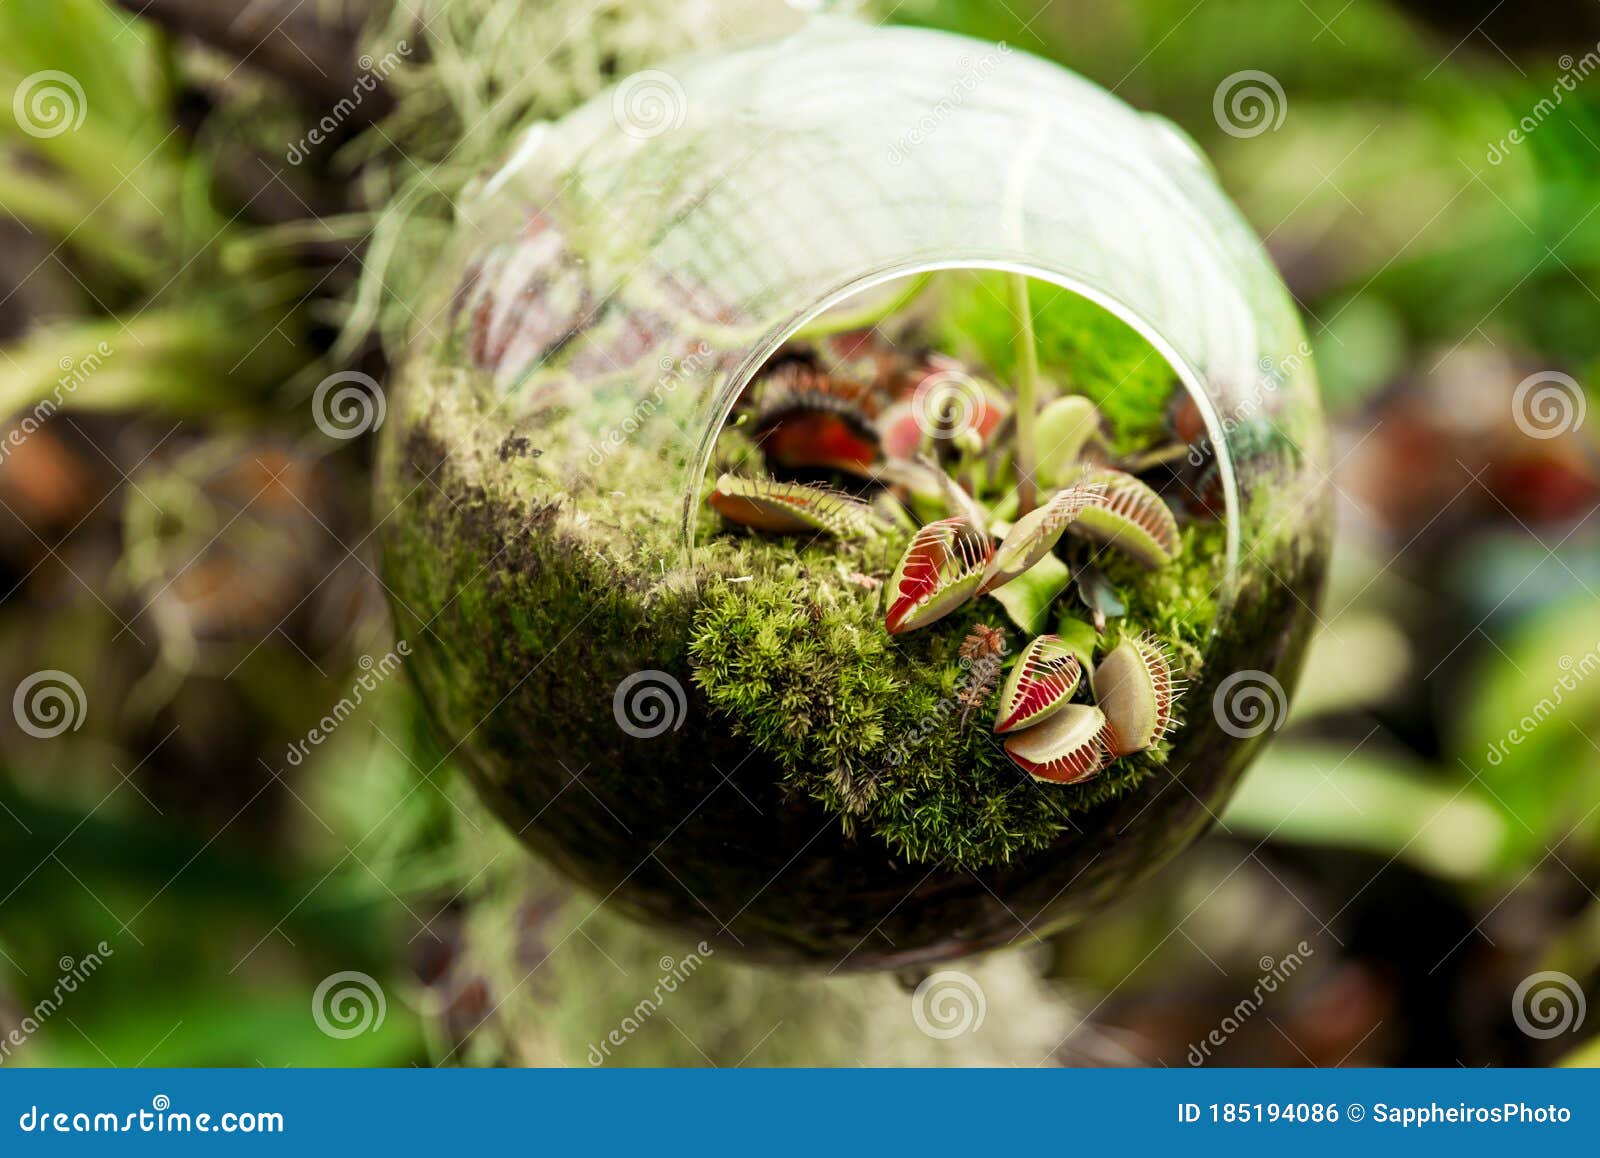 hanging glass globe terrarium with tropical carnivorous plants